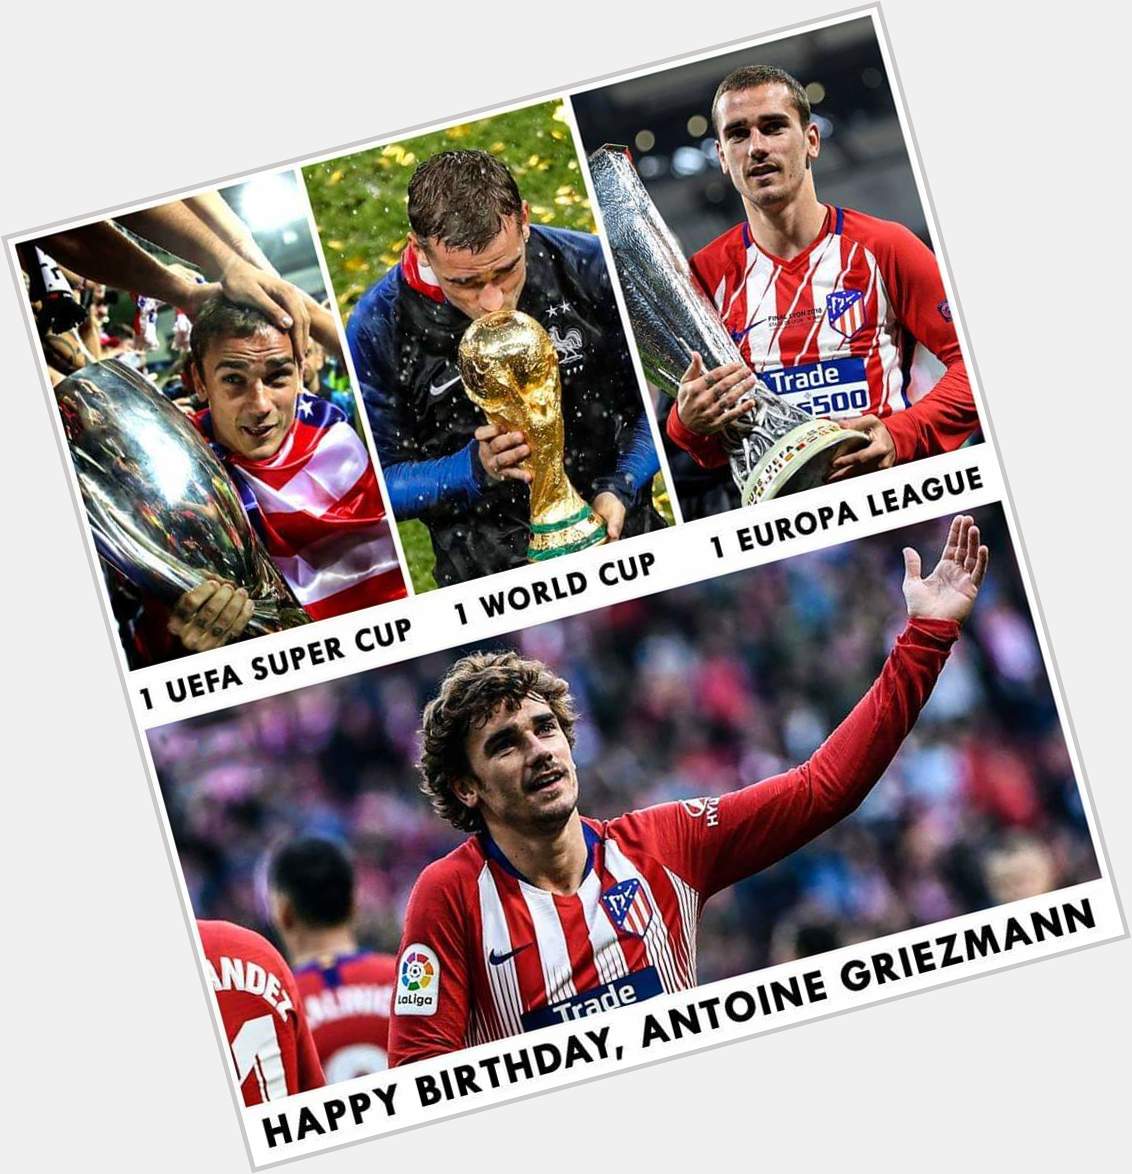 Happy Birthday, Antoine Griezmann  